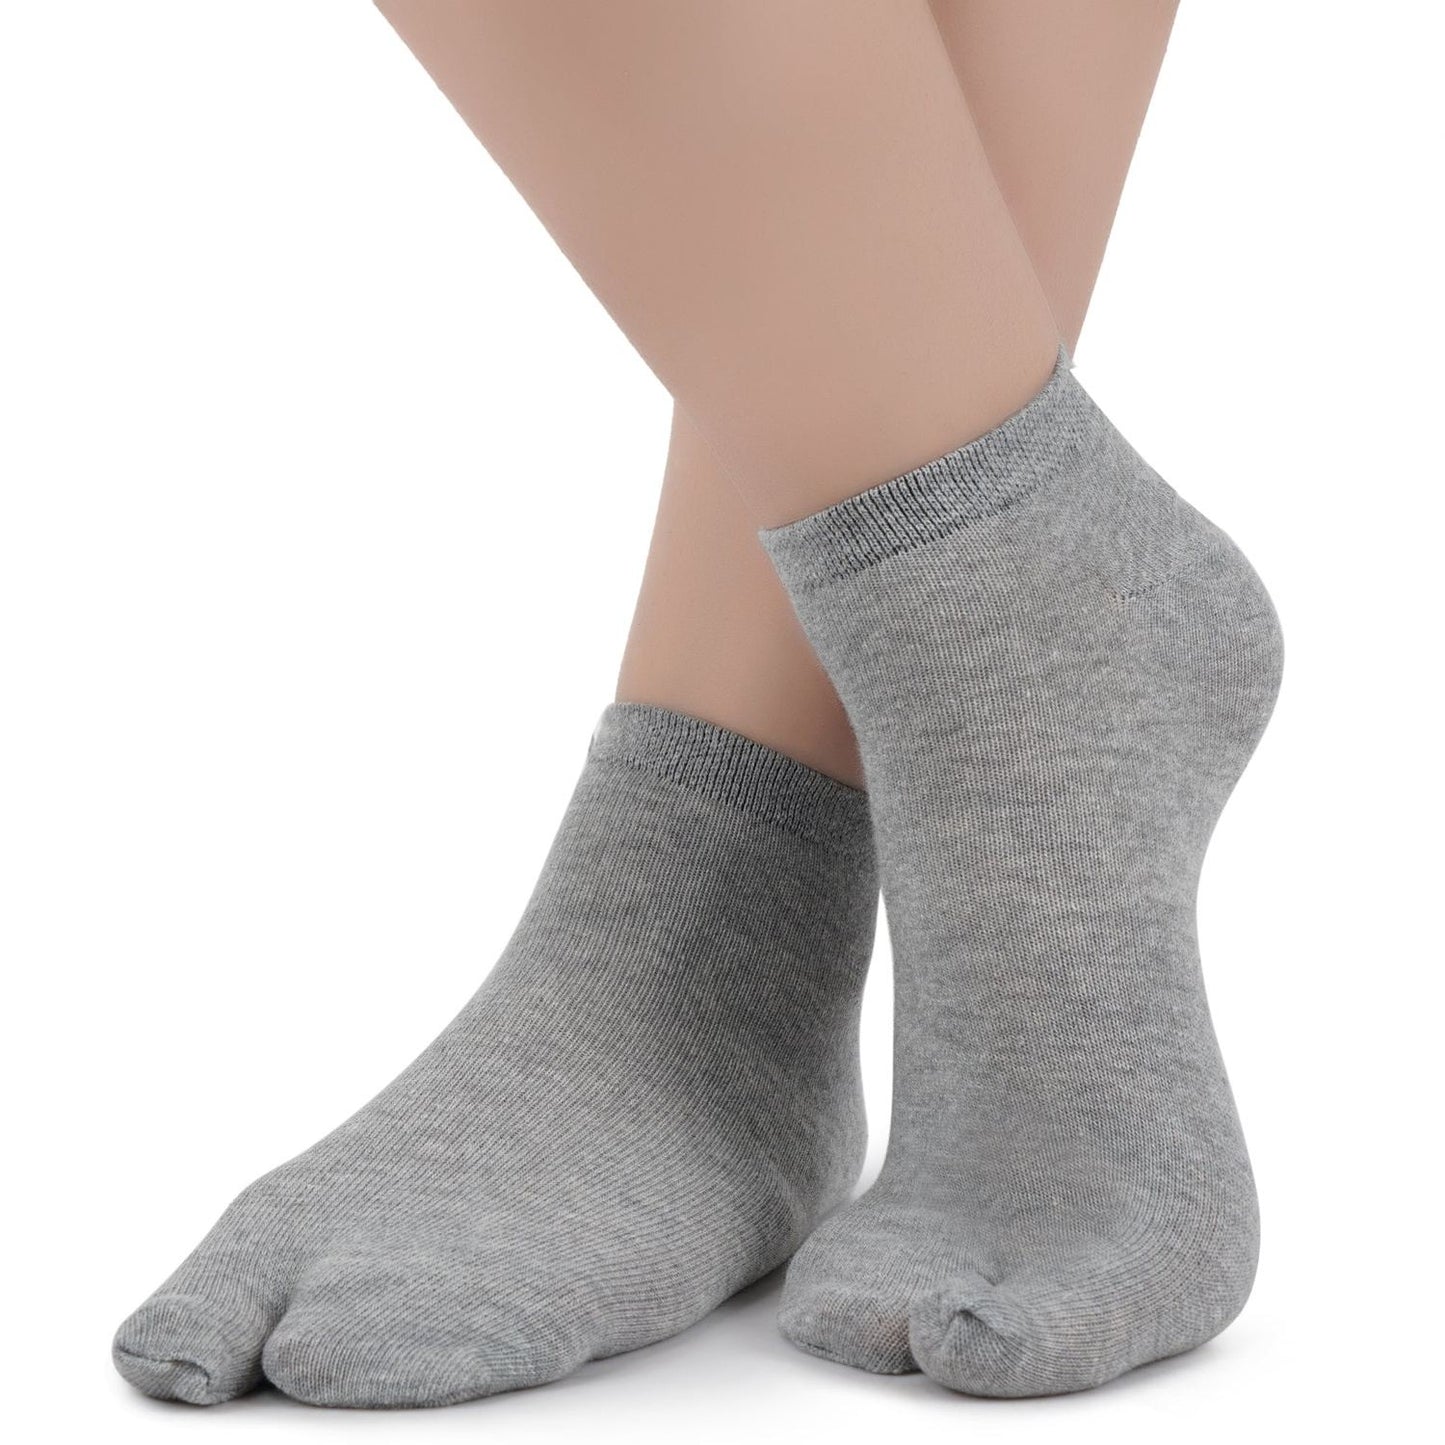 Low Ankle Length Thumb Socks - Light Grey